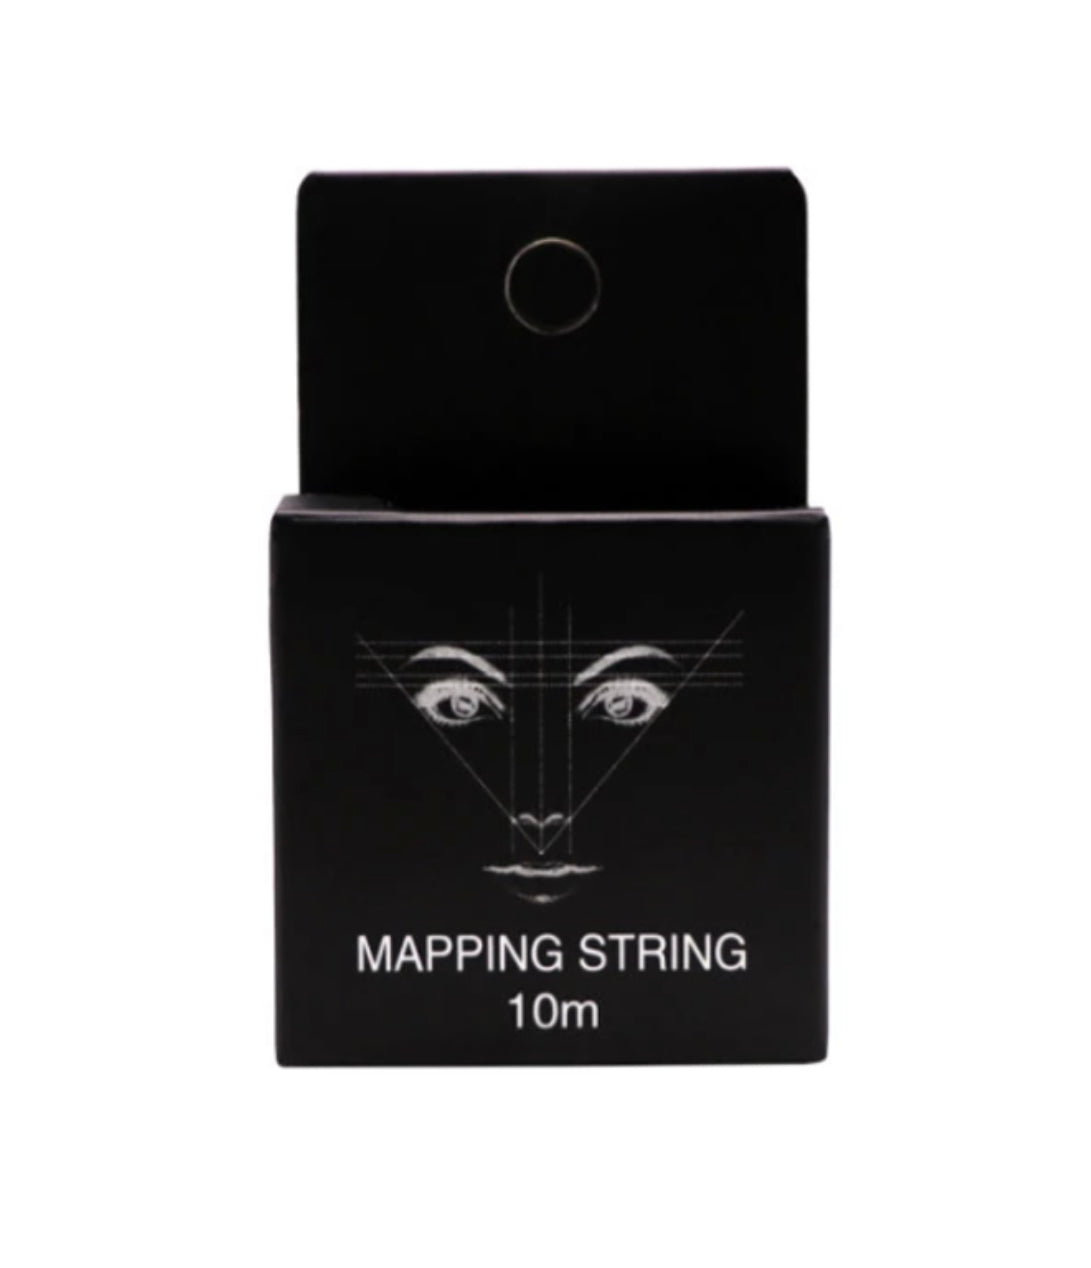 Eyebrow Mapping String 10m